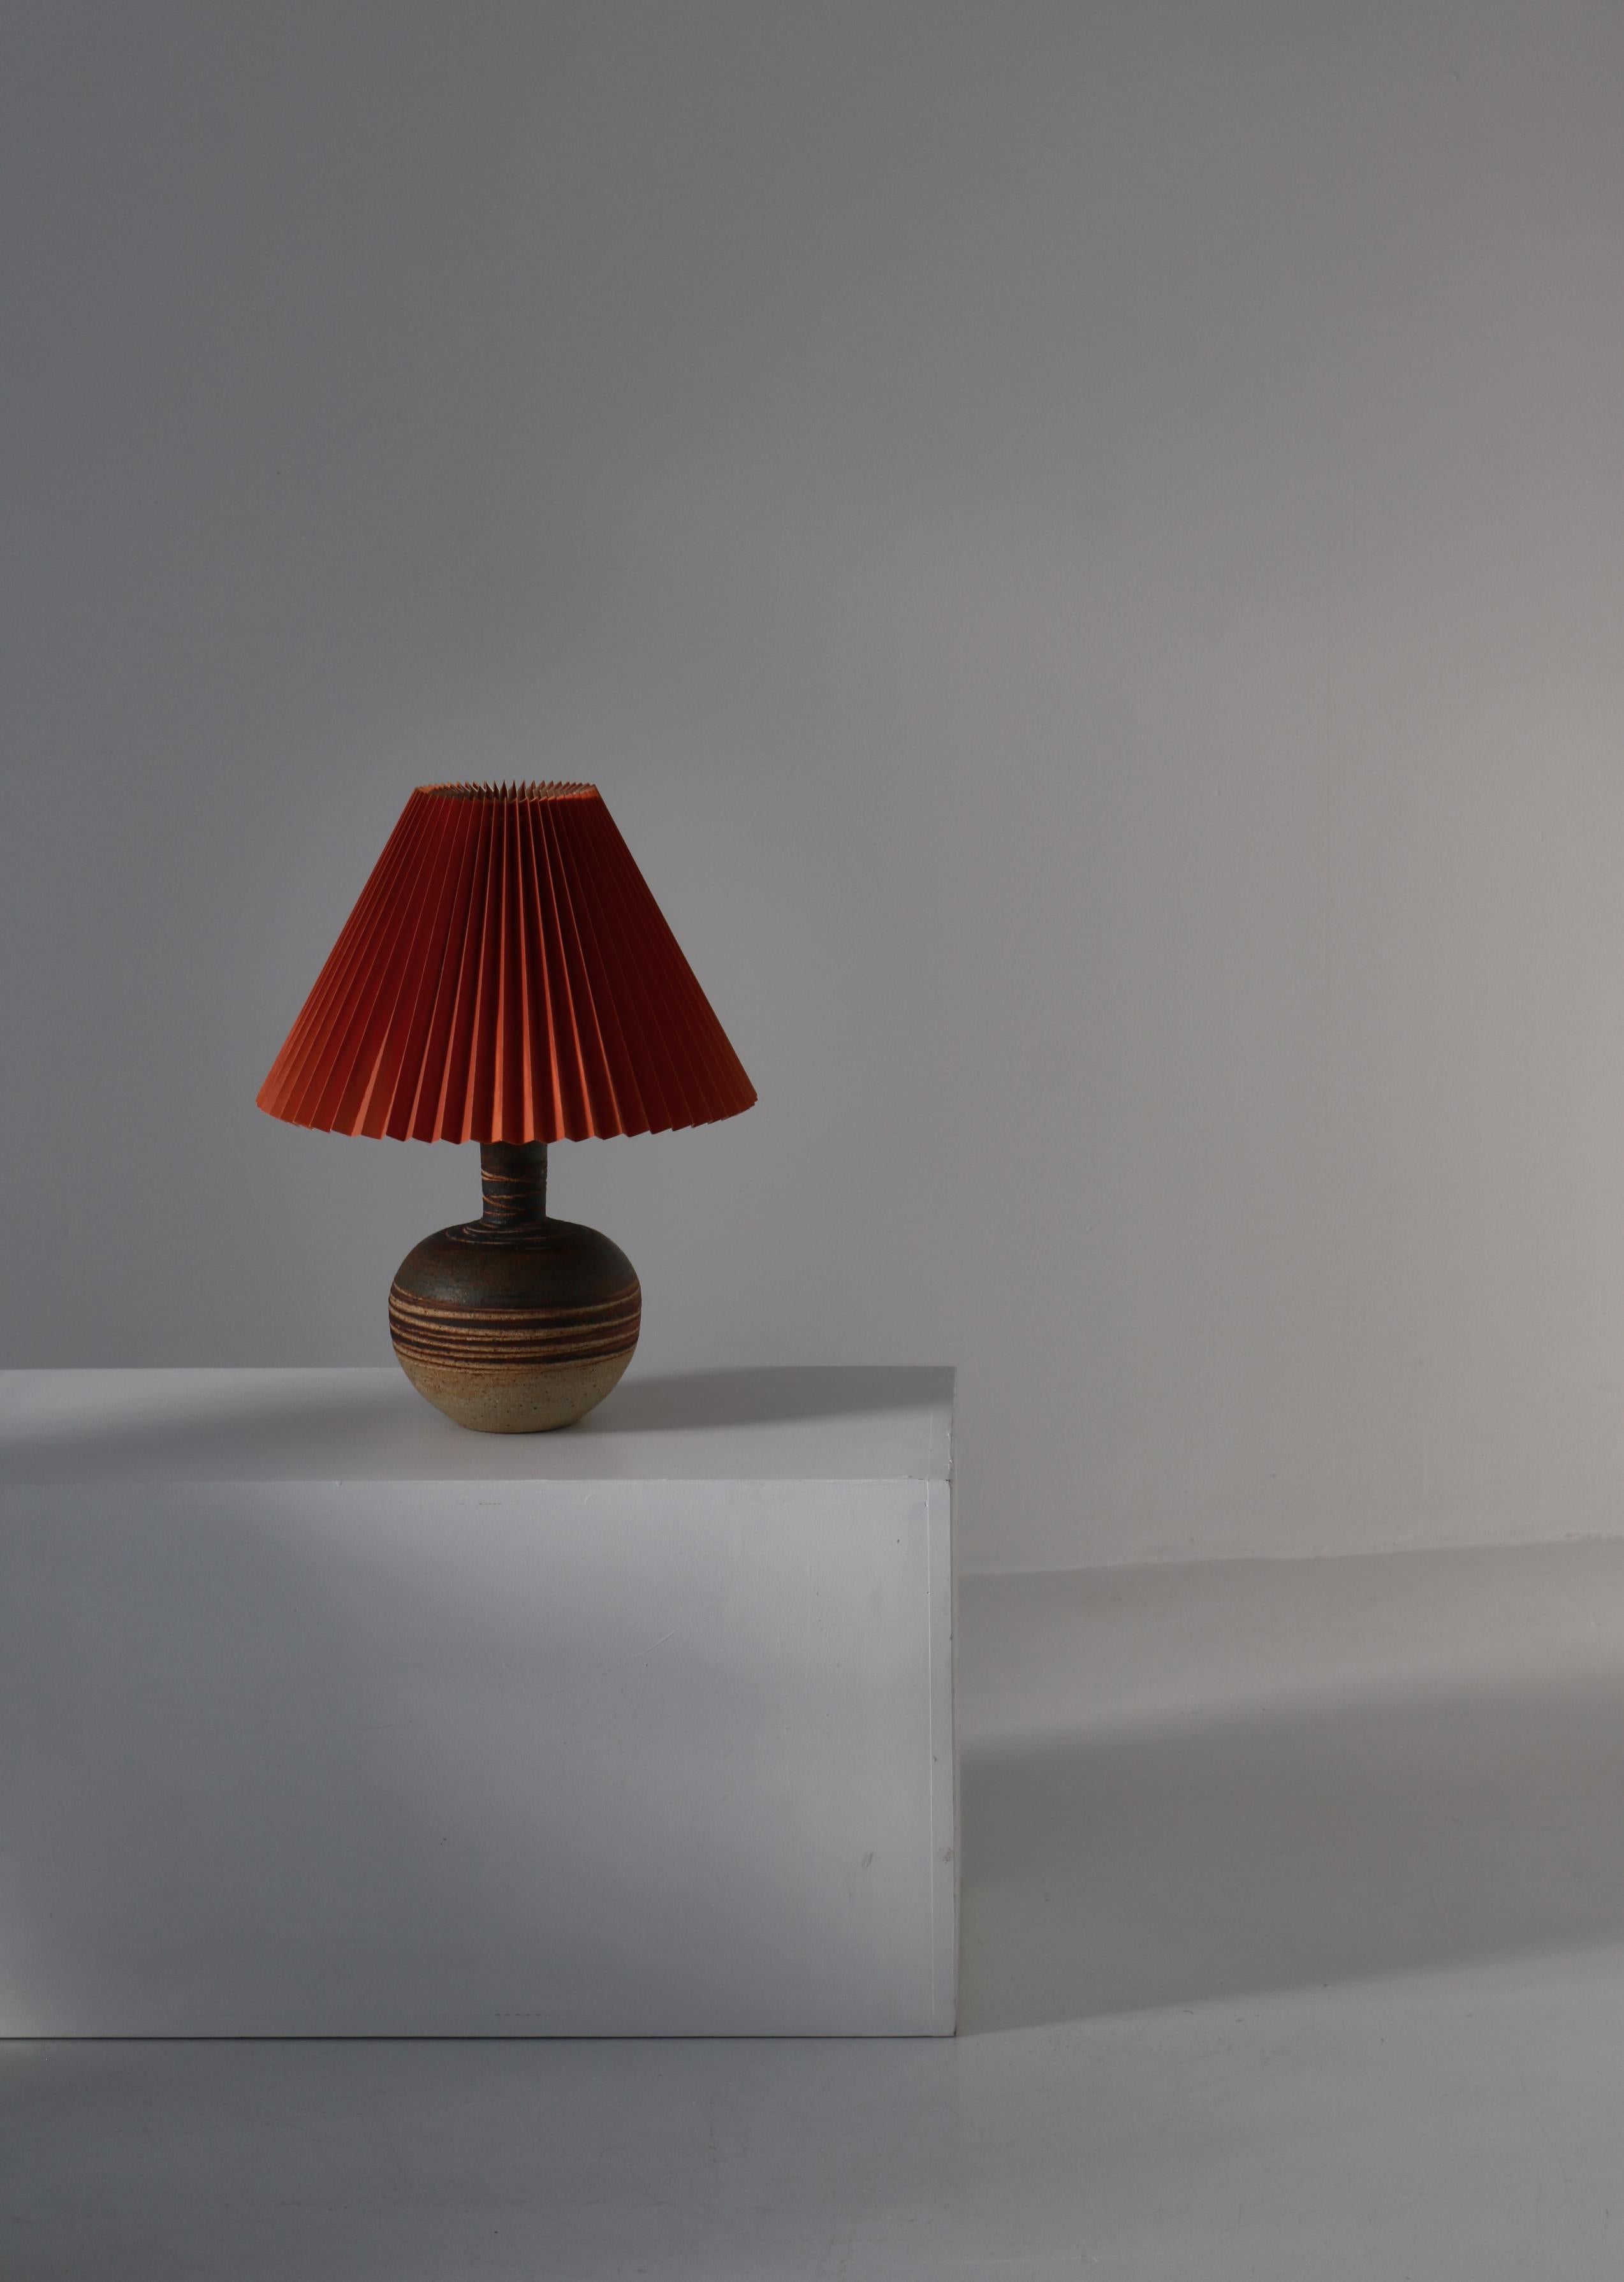 Tue Poulsen Table Lamp Scandinavian Modern Ceramic in Earth Colors, 1960s For Sale 6